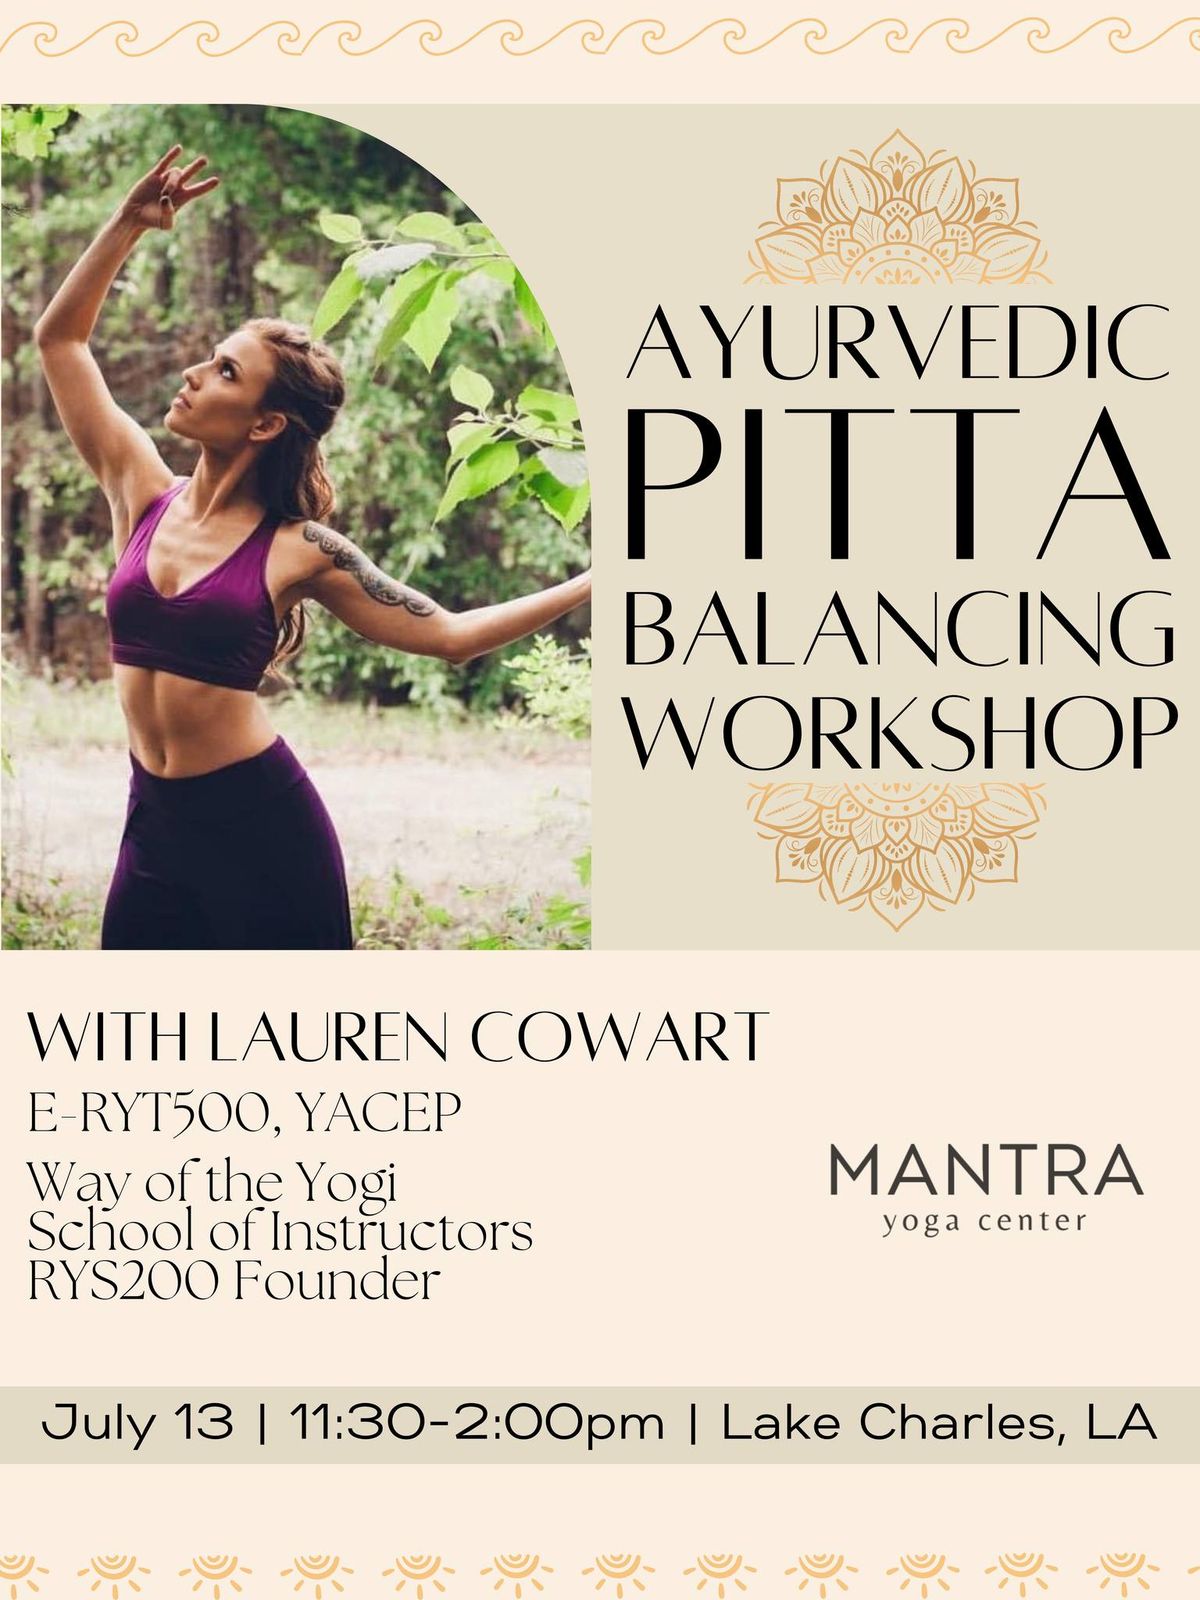 Ayurvedic Pitta Balancing Workshop with Lauren Cowart, E-RYT500, YACEP